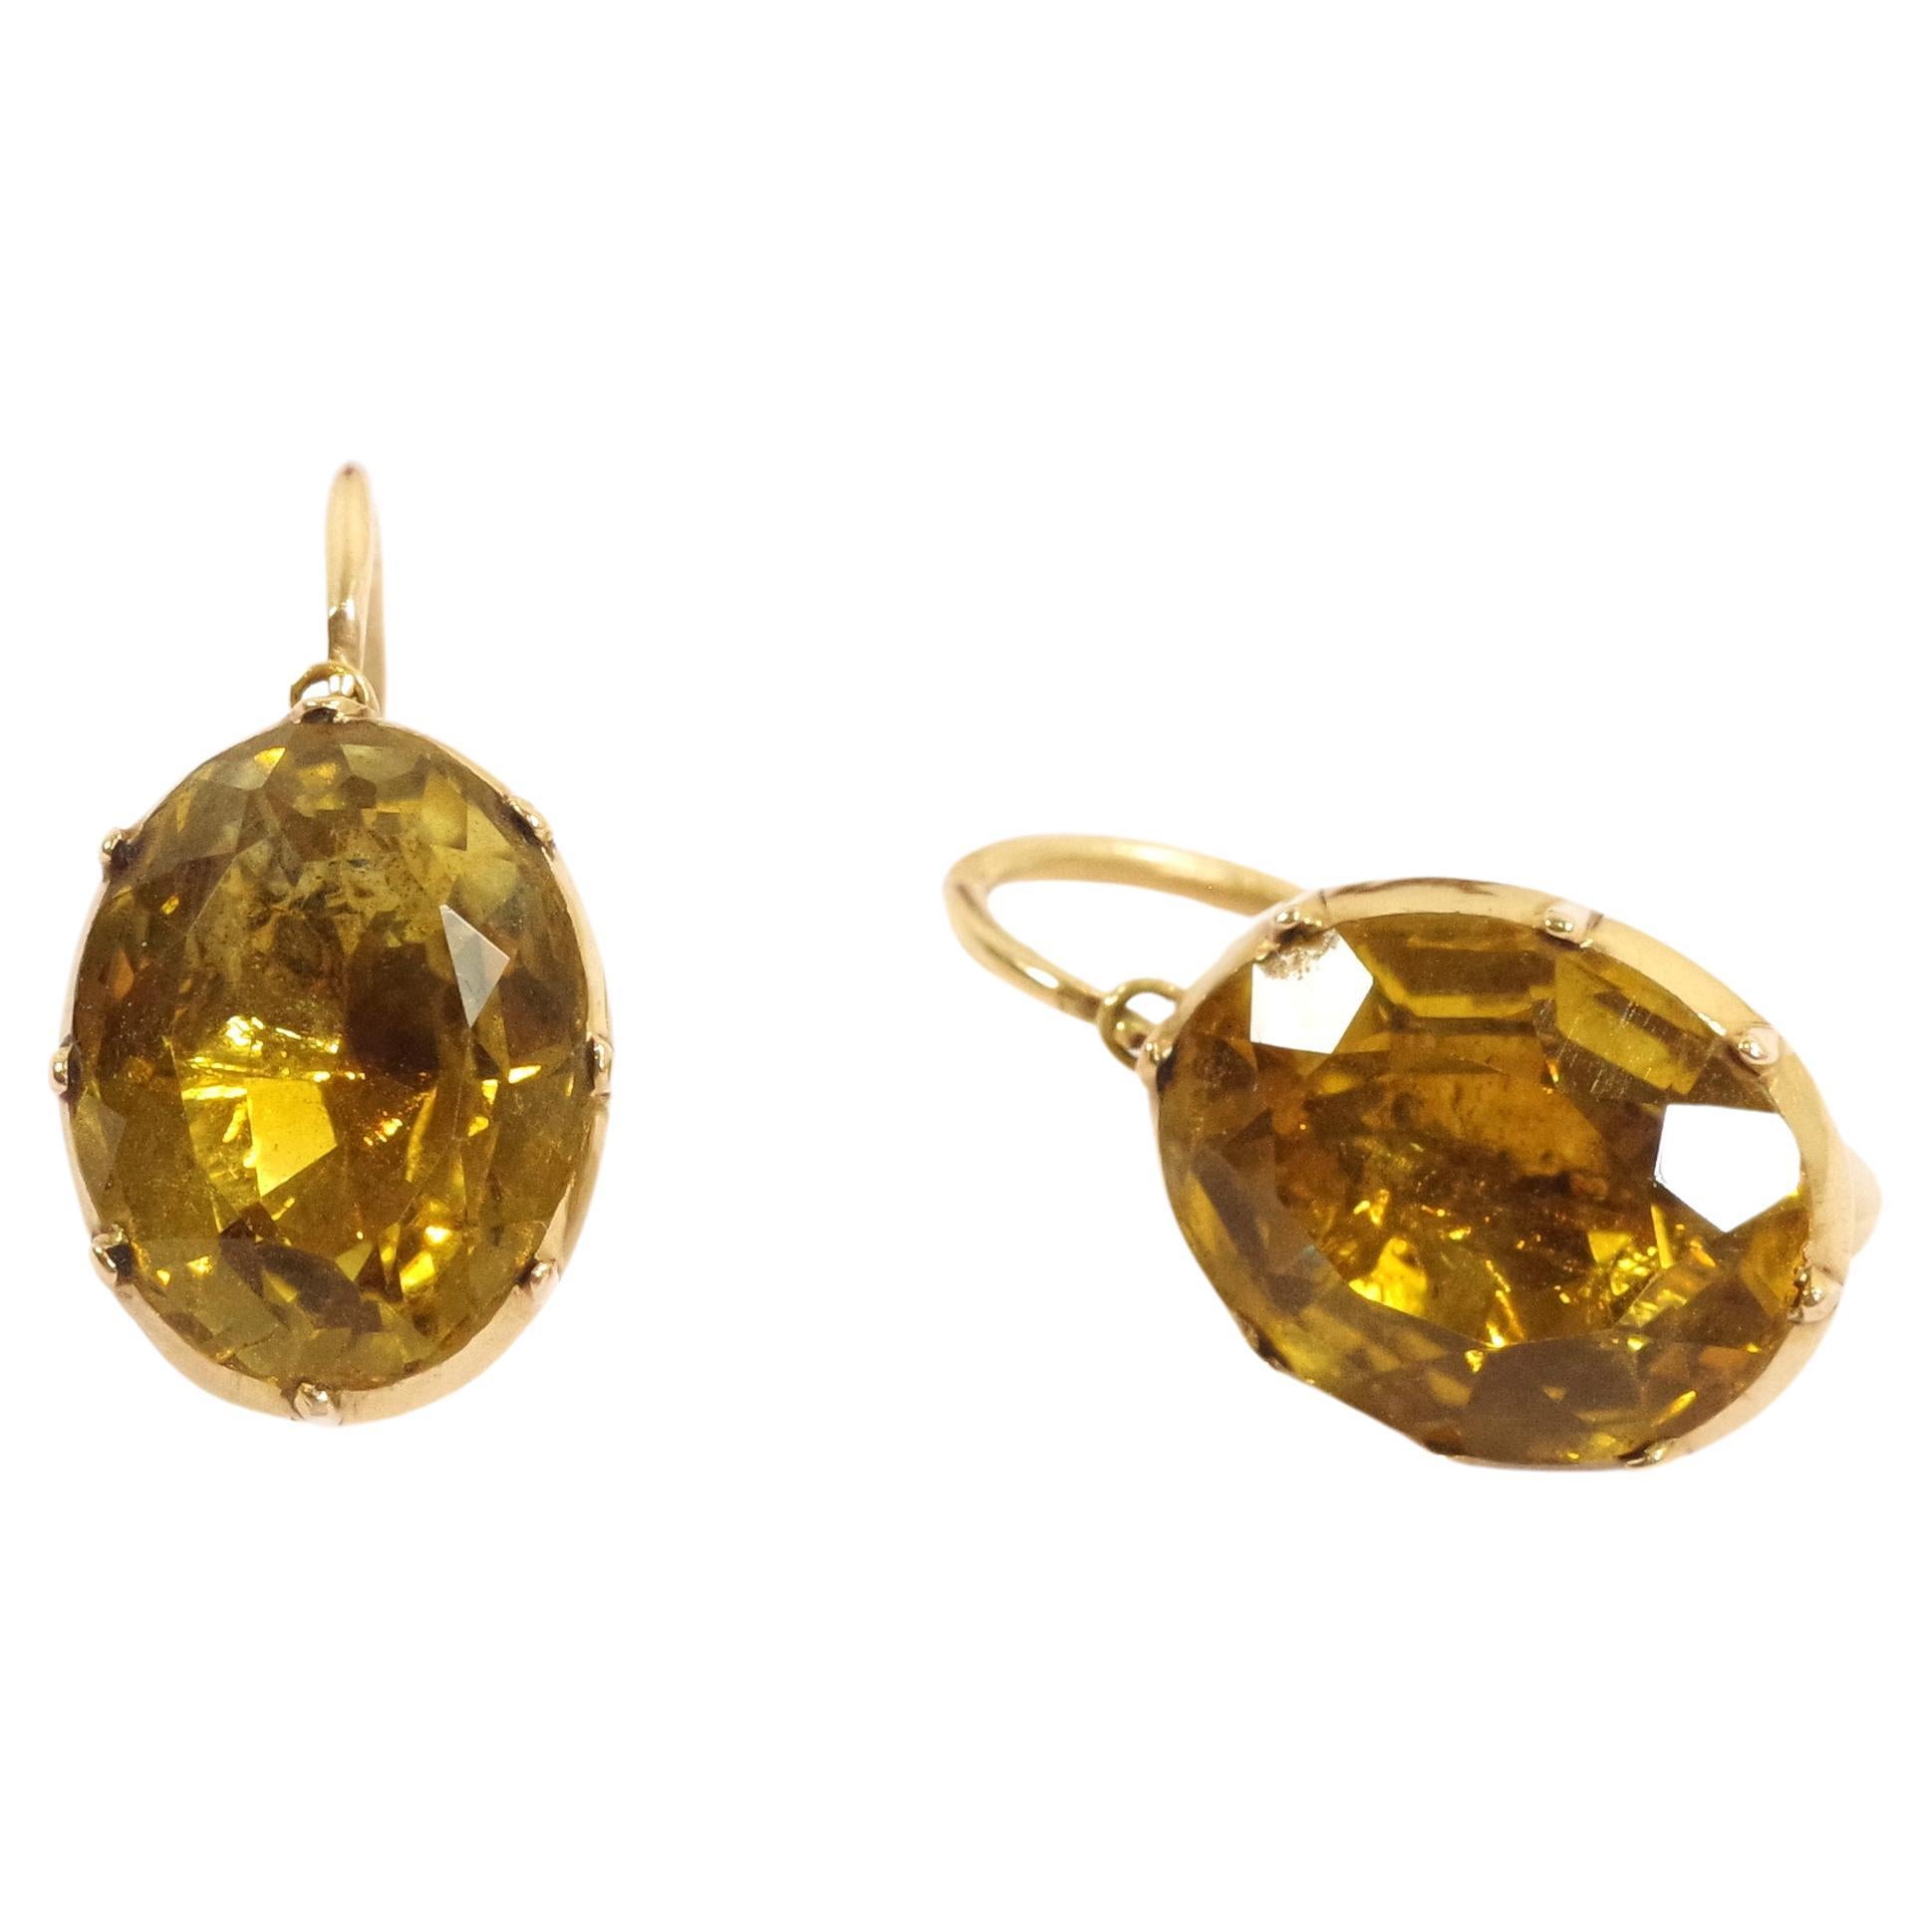 Georgian citrine earrings in 18k and 14 karat, antique foiled earrings For Sale